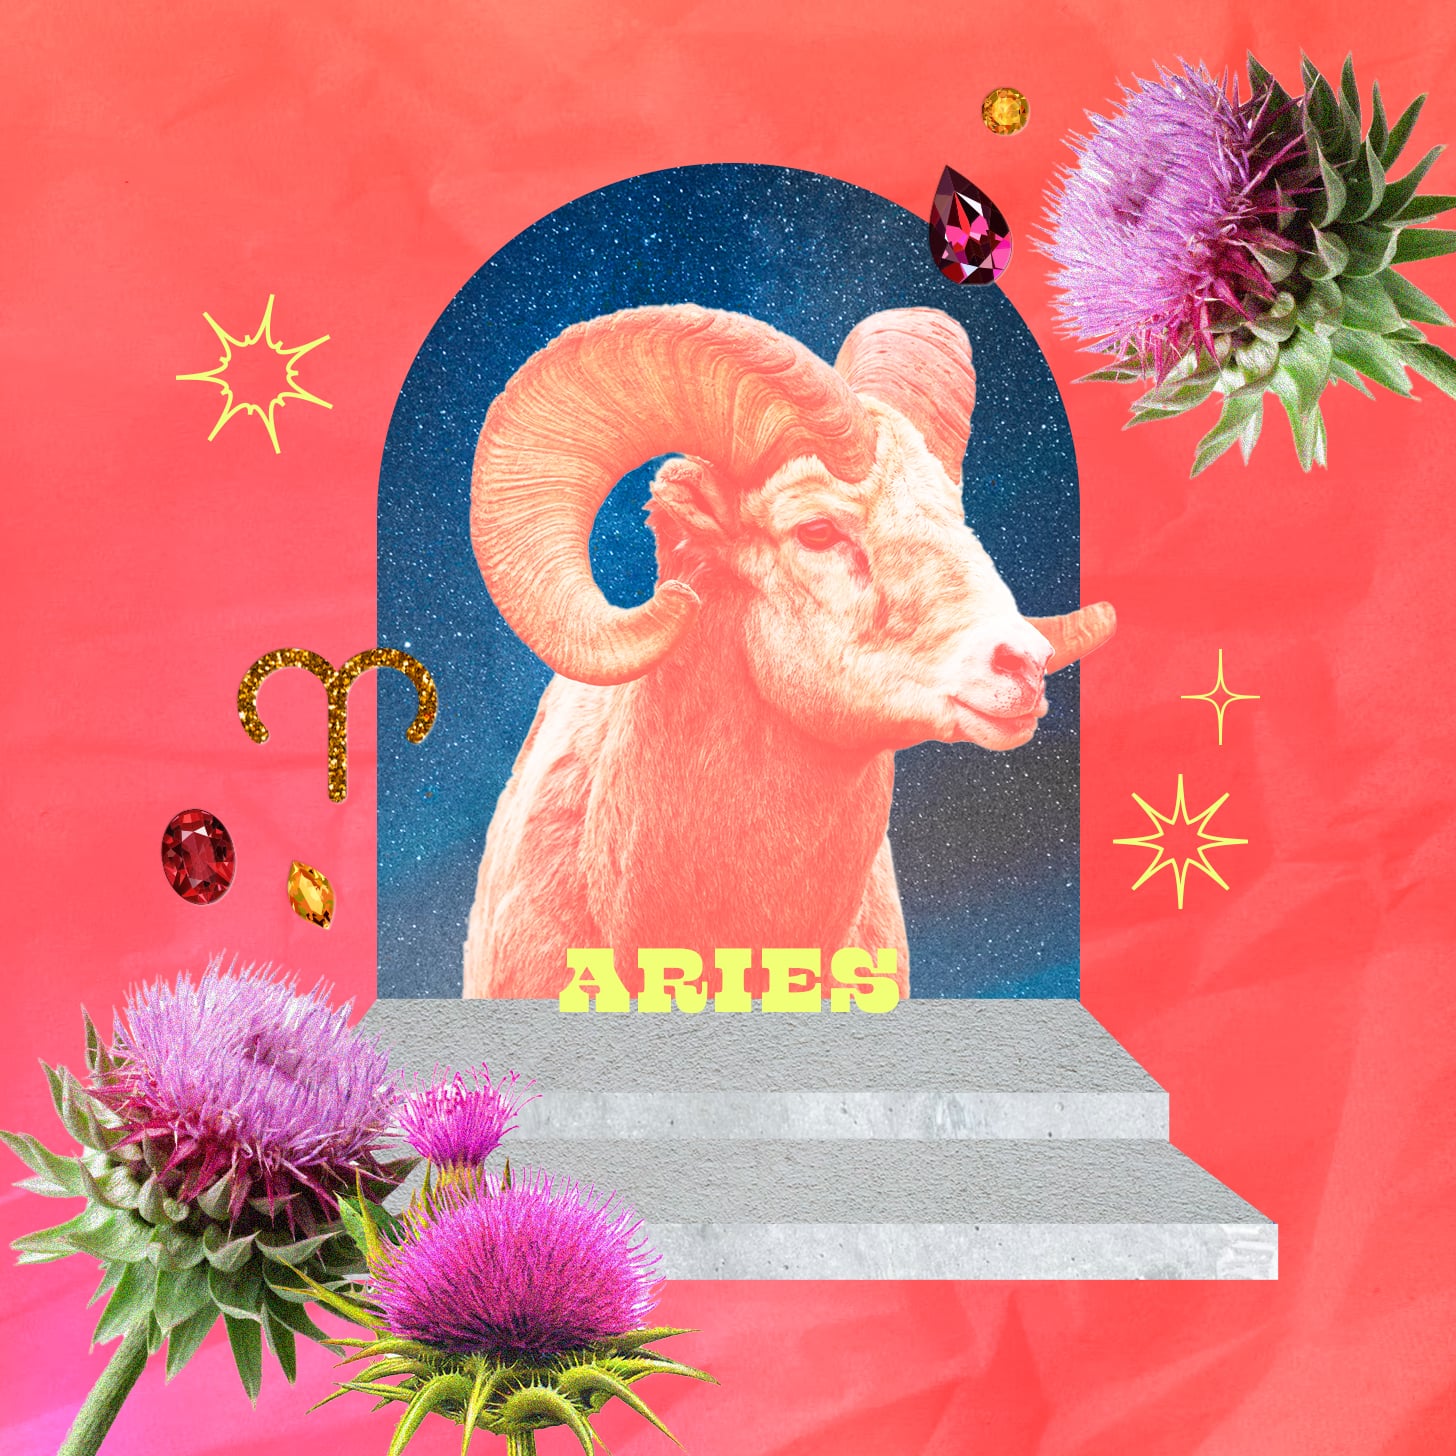 Aries weekly horoscope for September 18, 2022